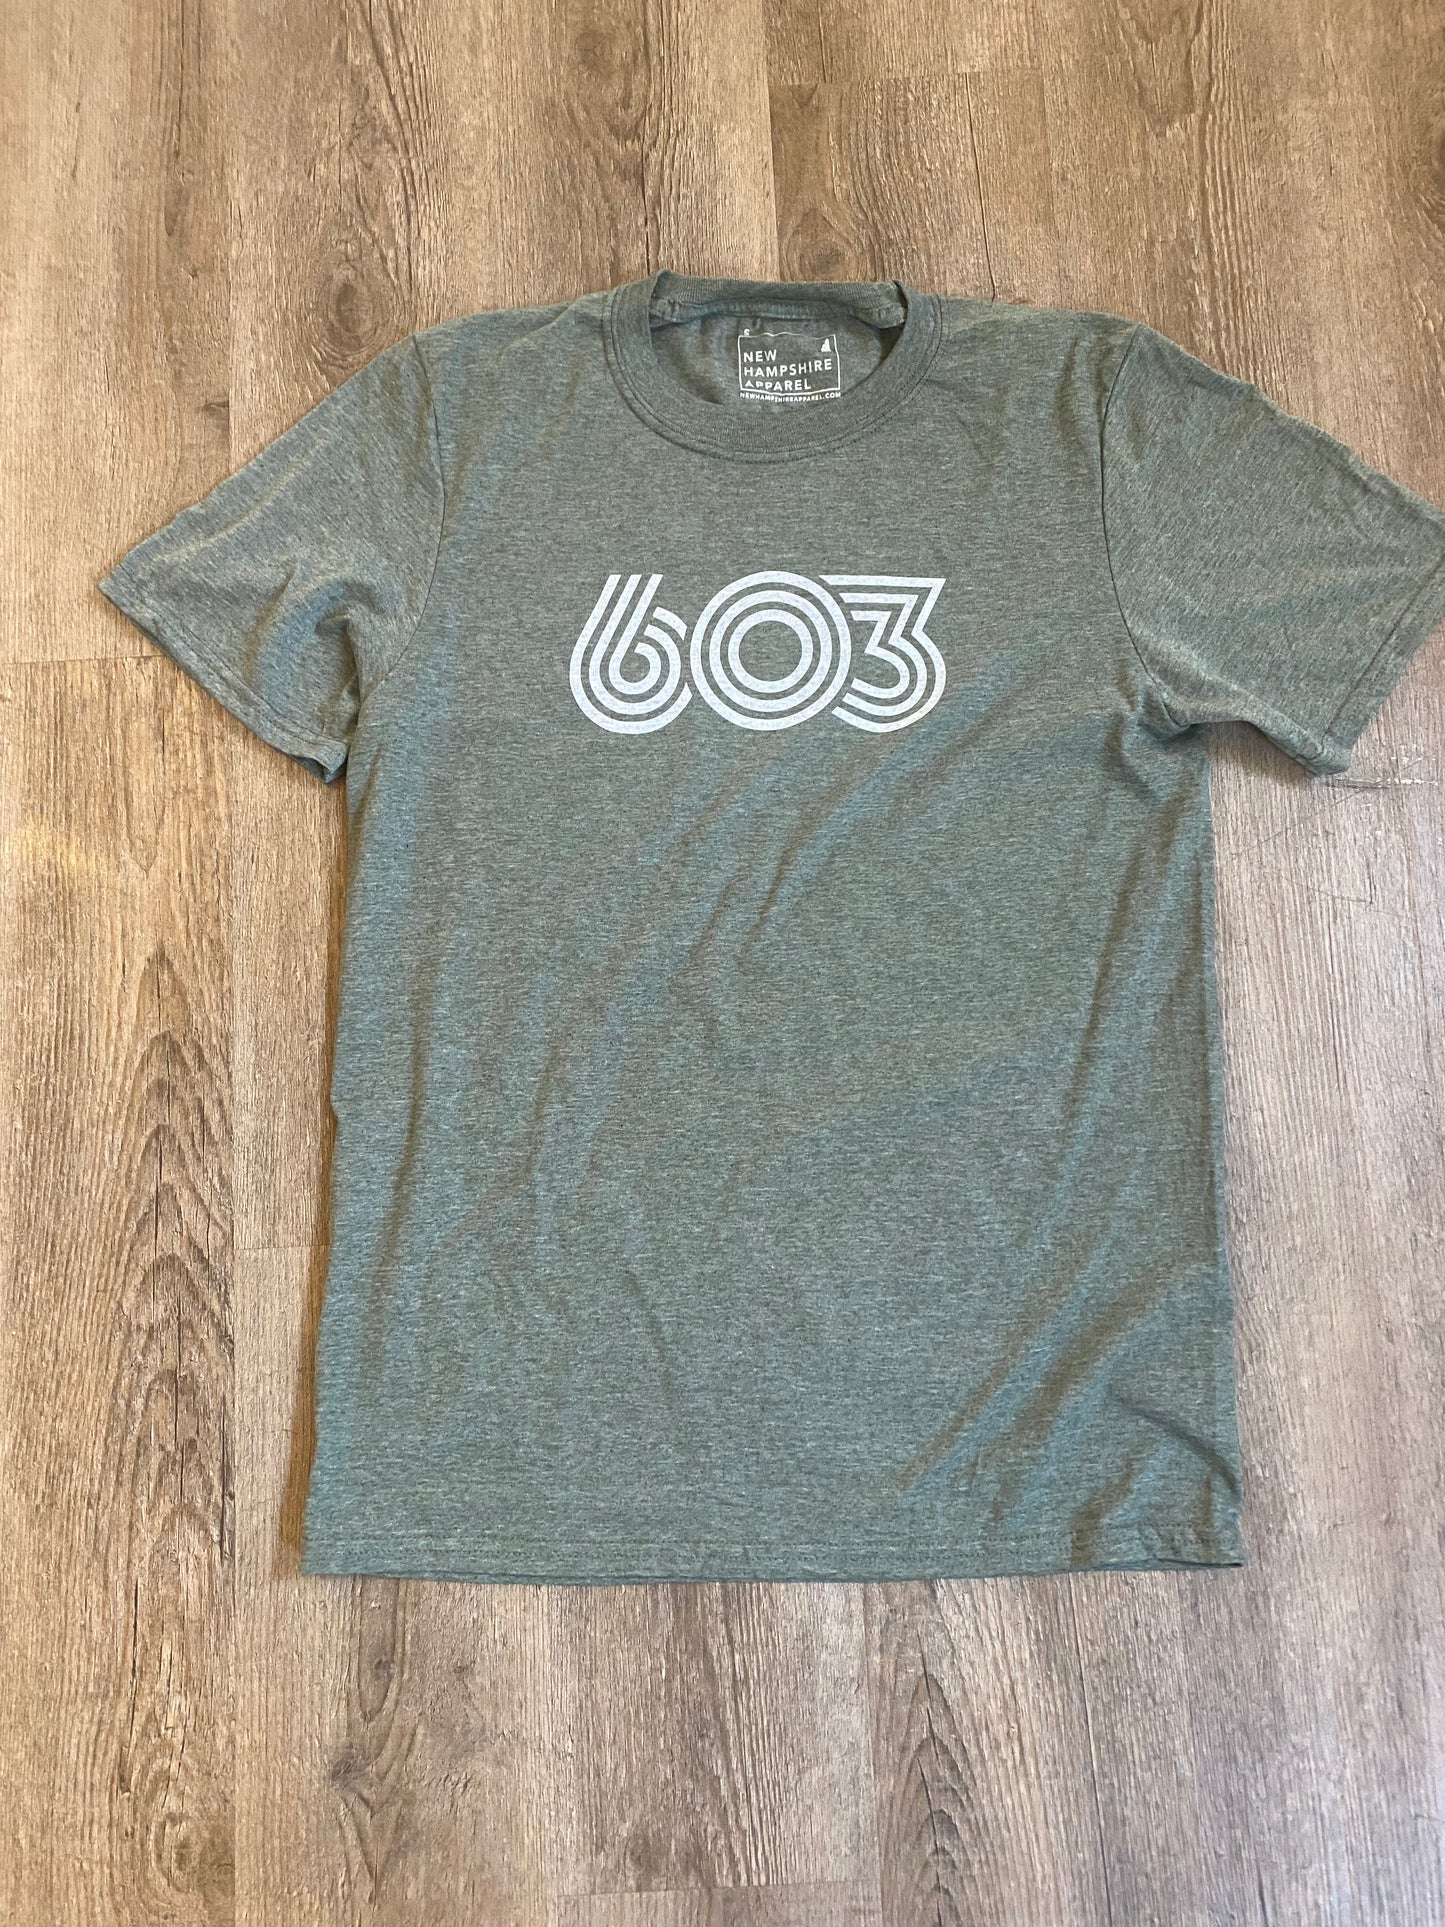 Retro 603 Tee Shirt